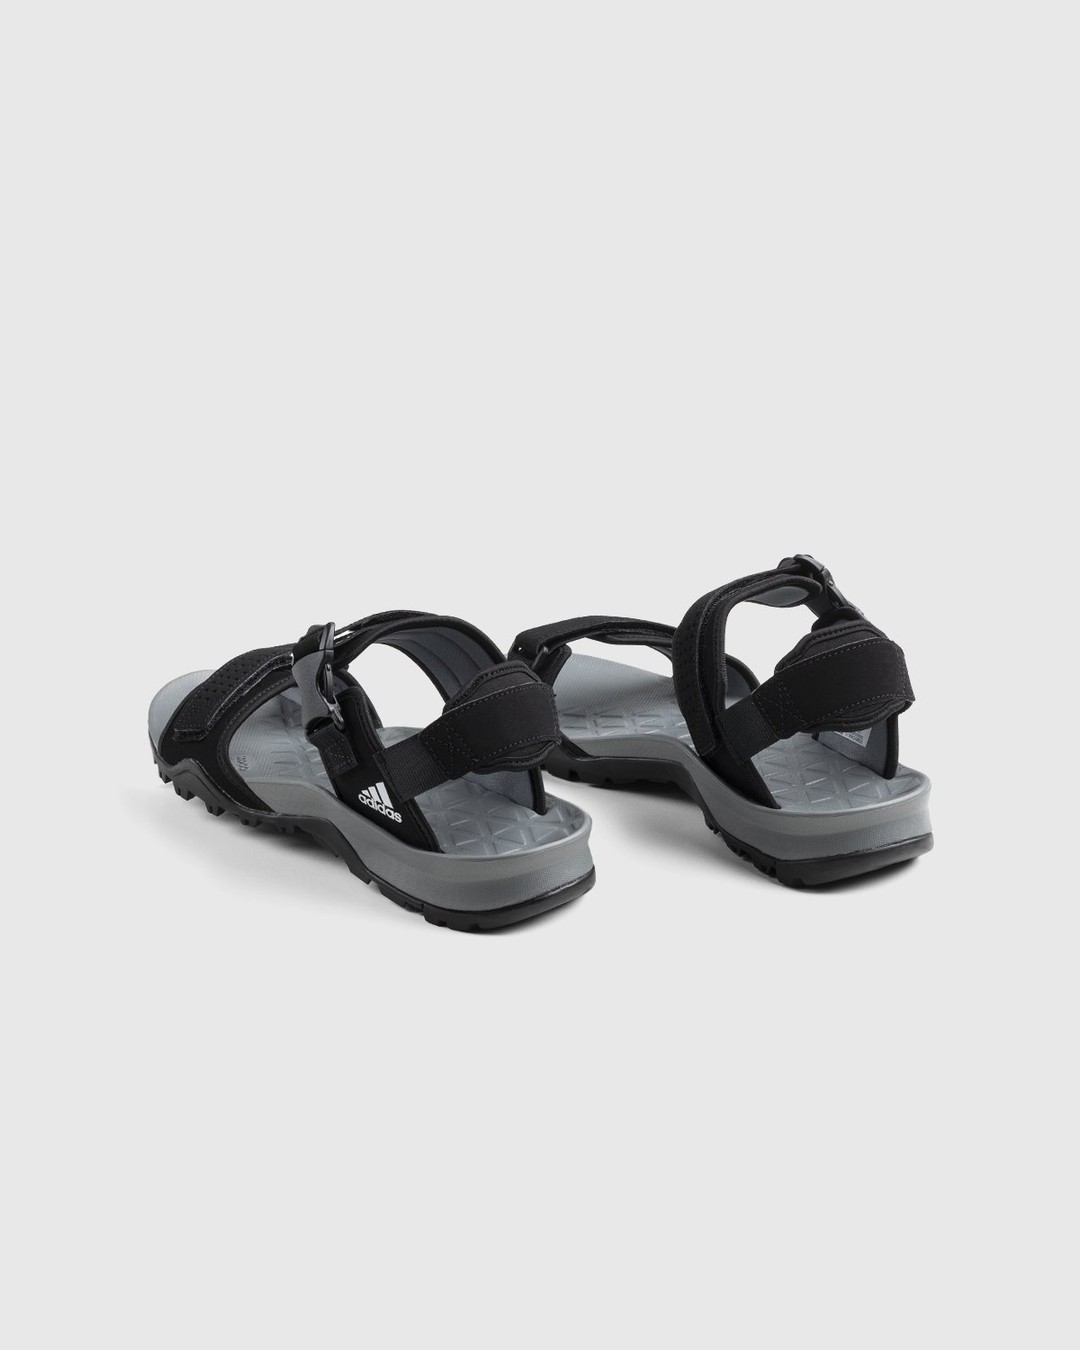 Adidas – Cyprex Ultra II Sandals Core Black Vista Grey Cloud White - Sandals & Slides - Black - Image 4